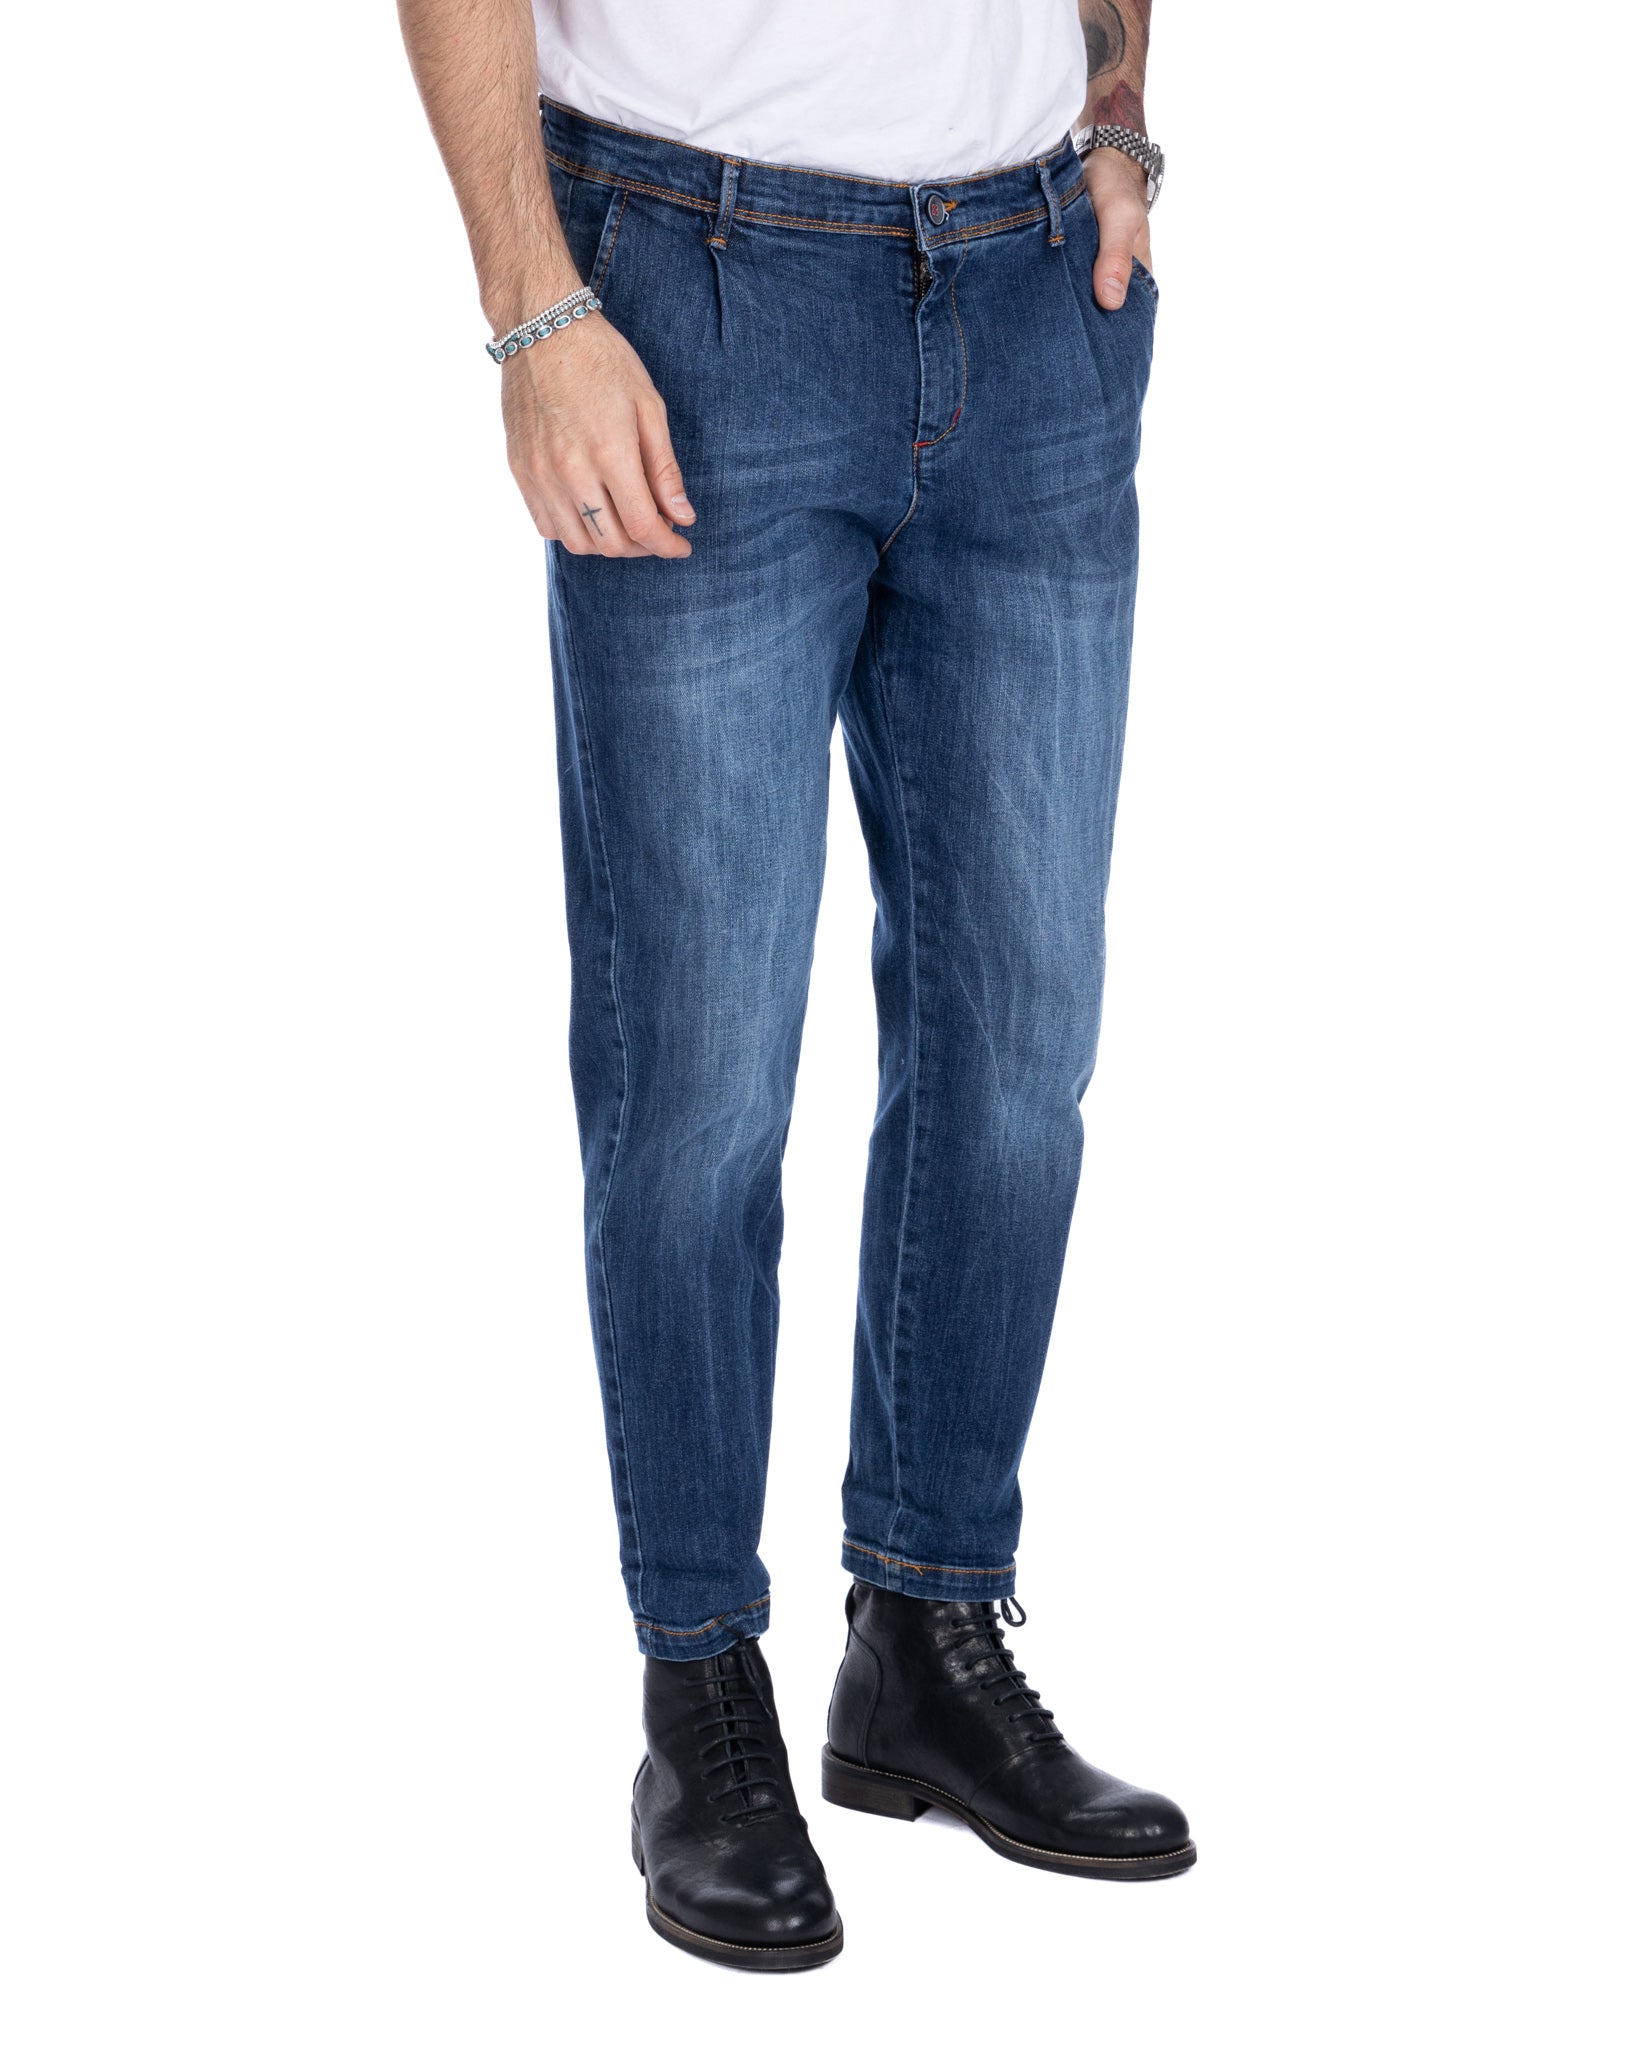 Orleans - america pocket jeans medium wash